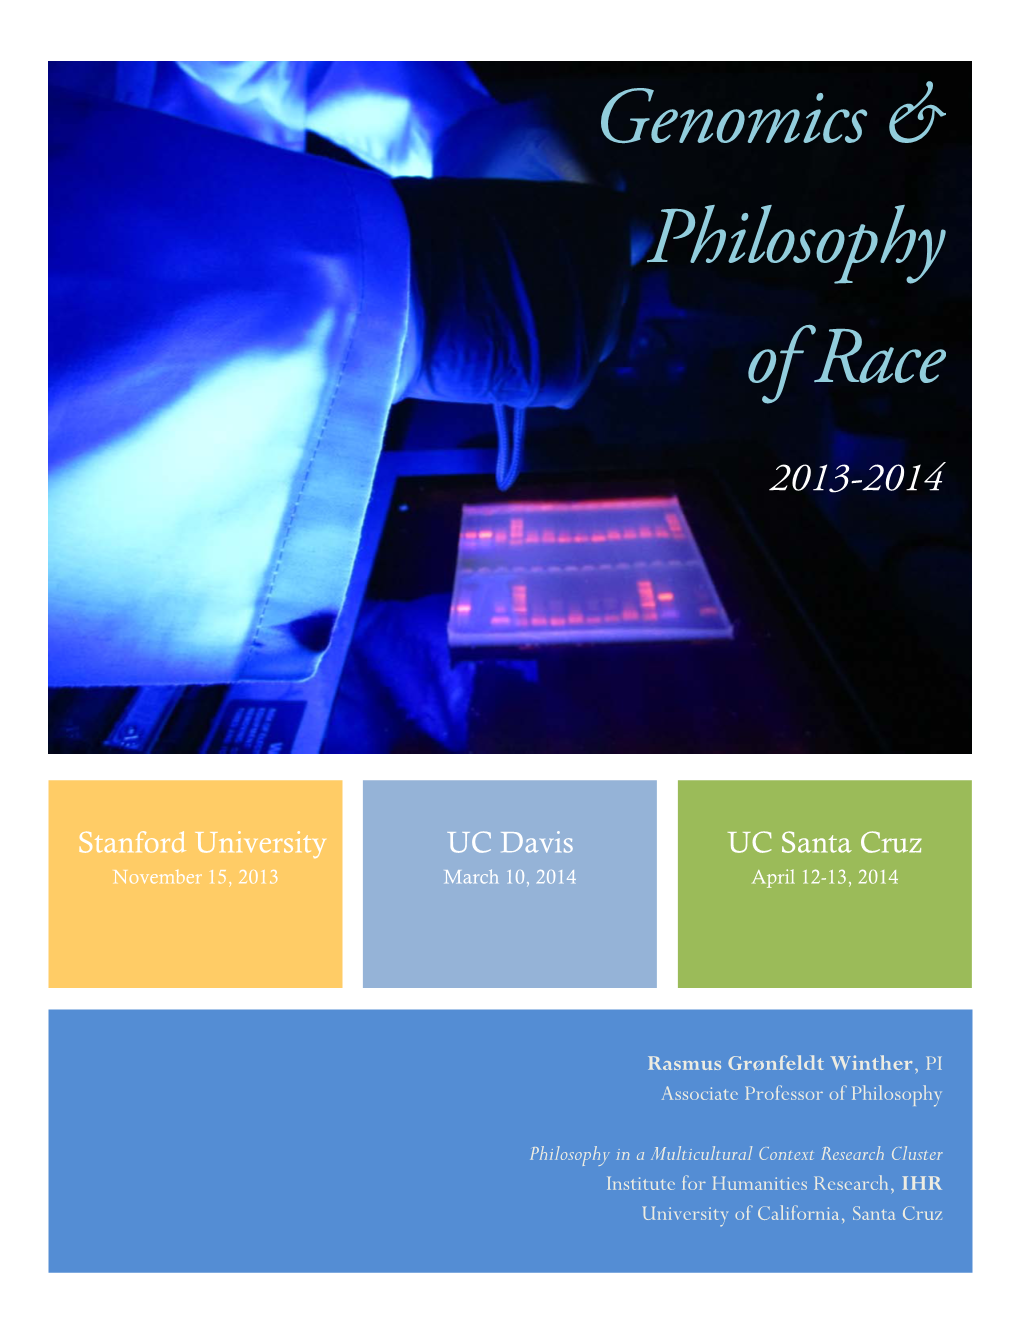 Winther Et Al 2013 3014 Genomics & Philosphy of Race